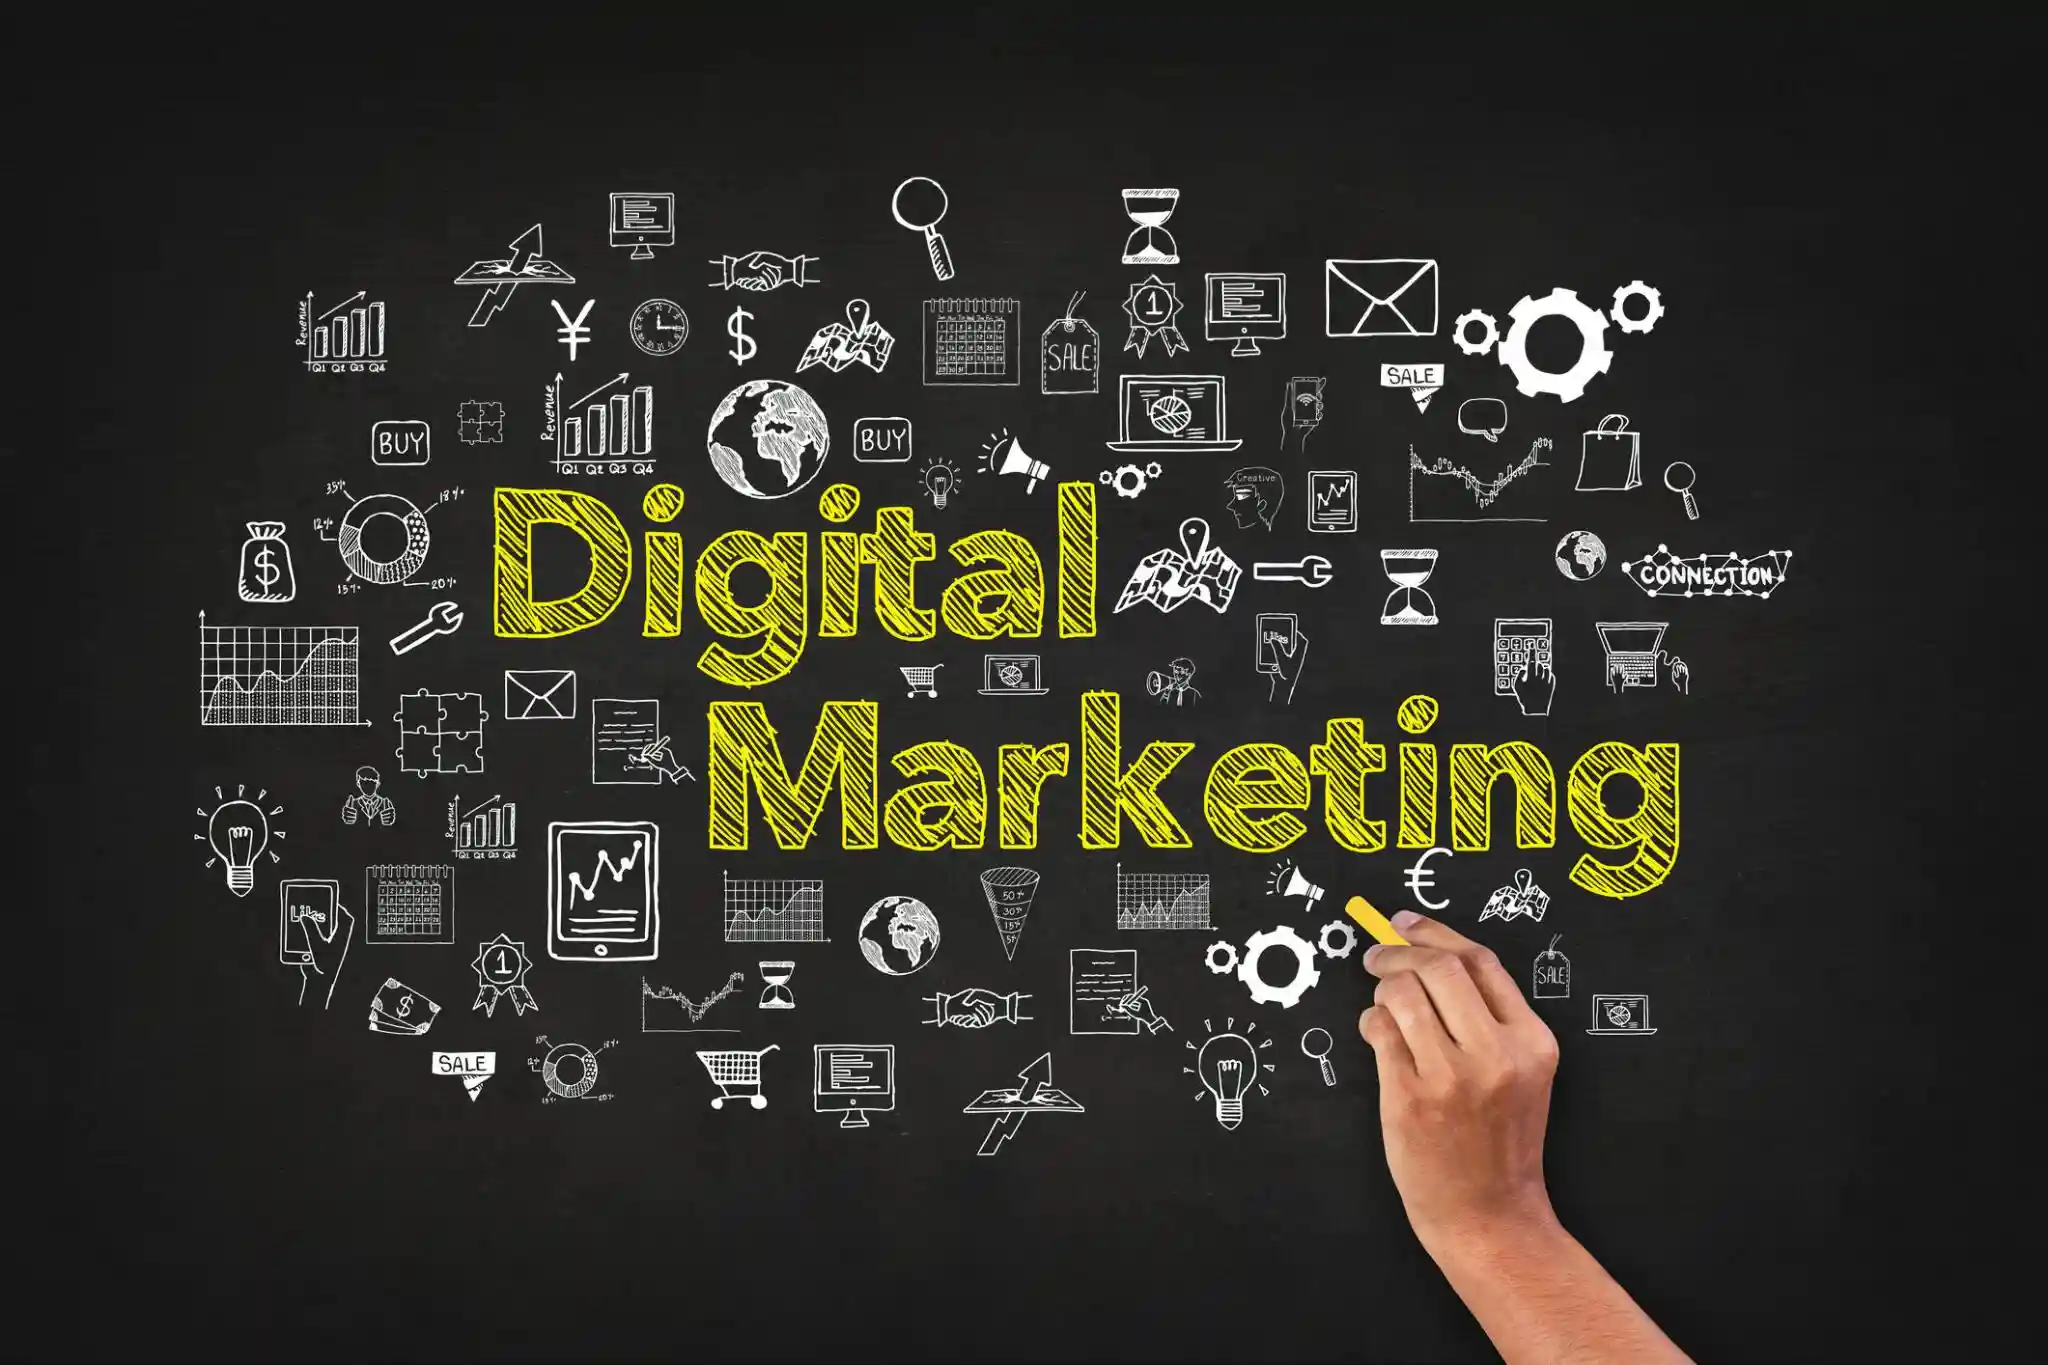 Digital Marketing Company In Pune